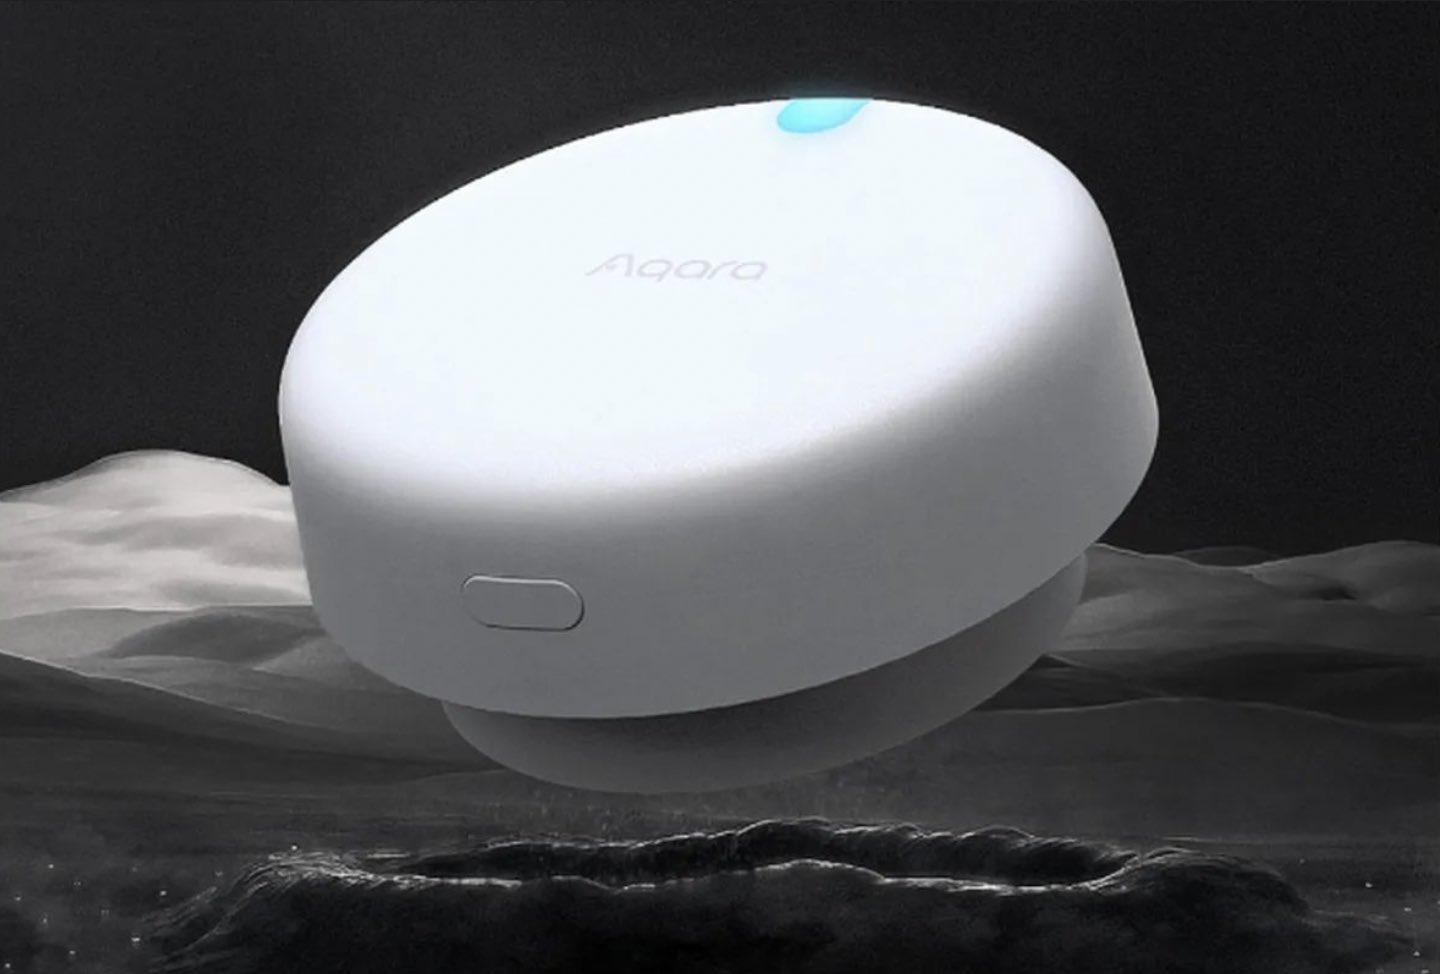 This Smart Home Sensor is INCREDIBLE! Aqara FP2 mmwave 